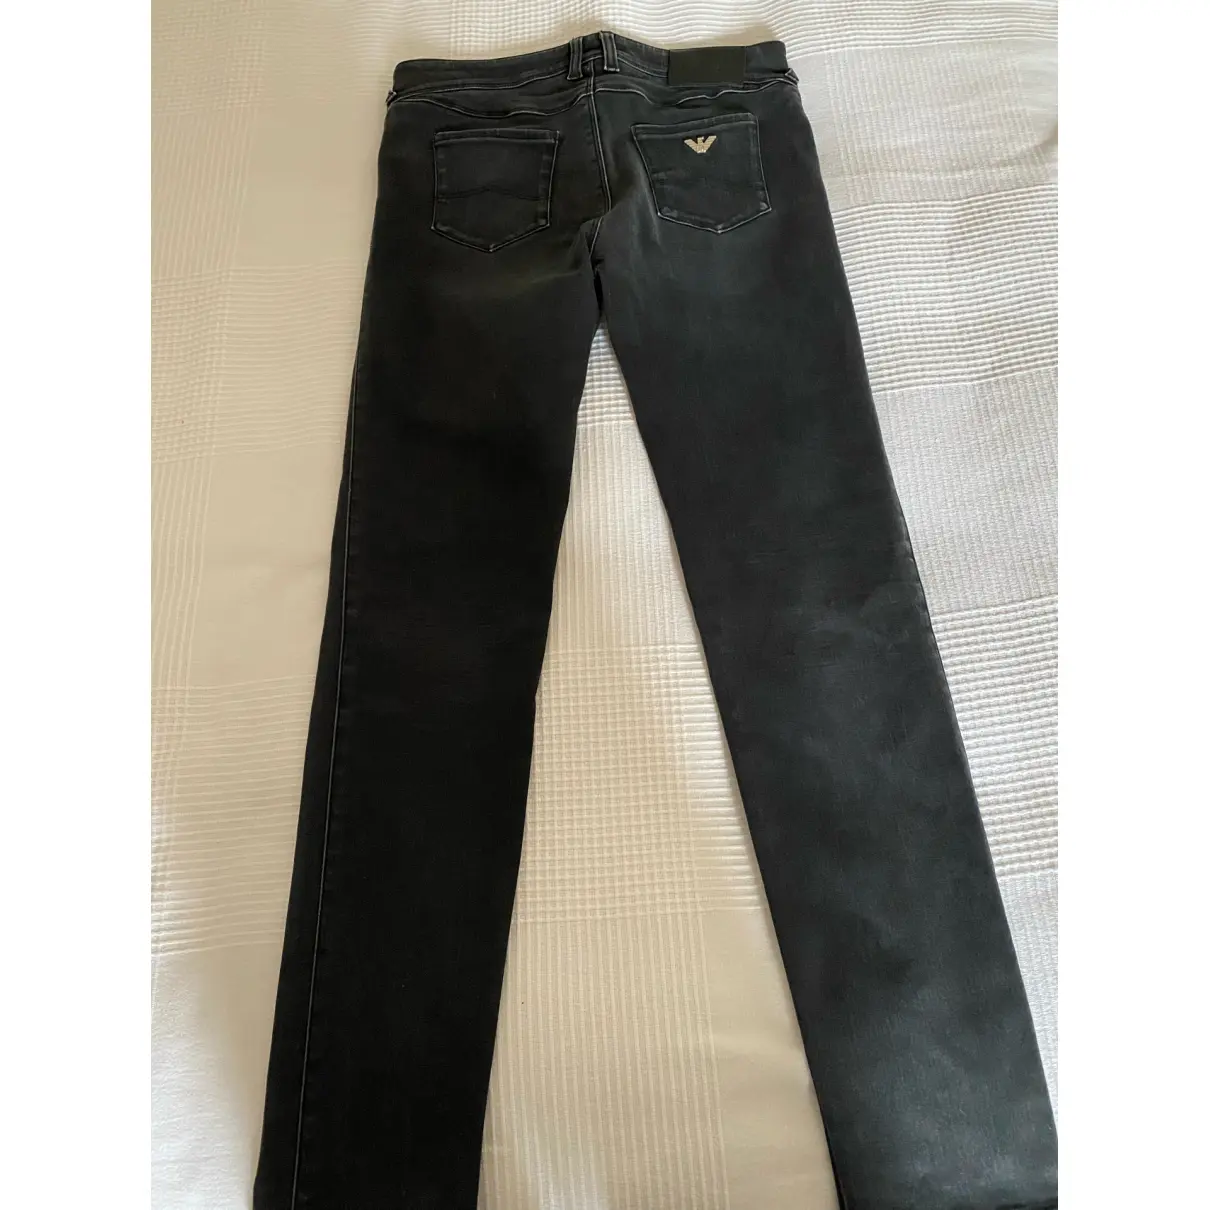 Buy Armani Jeans Slim jeans online